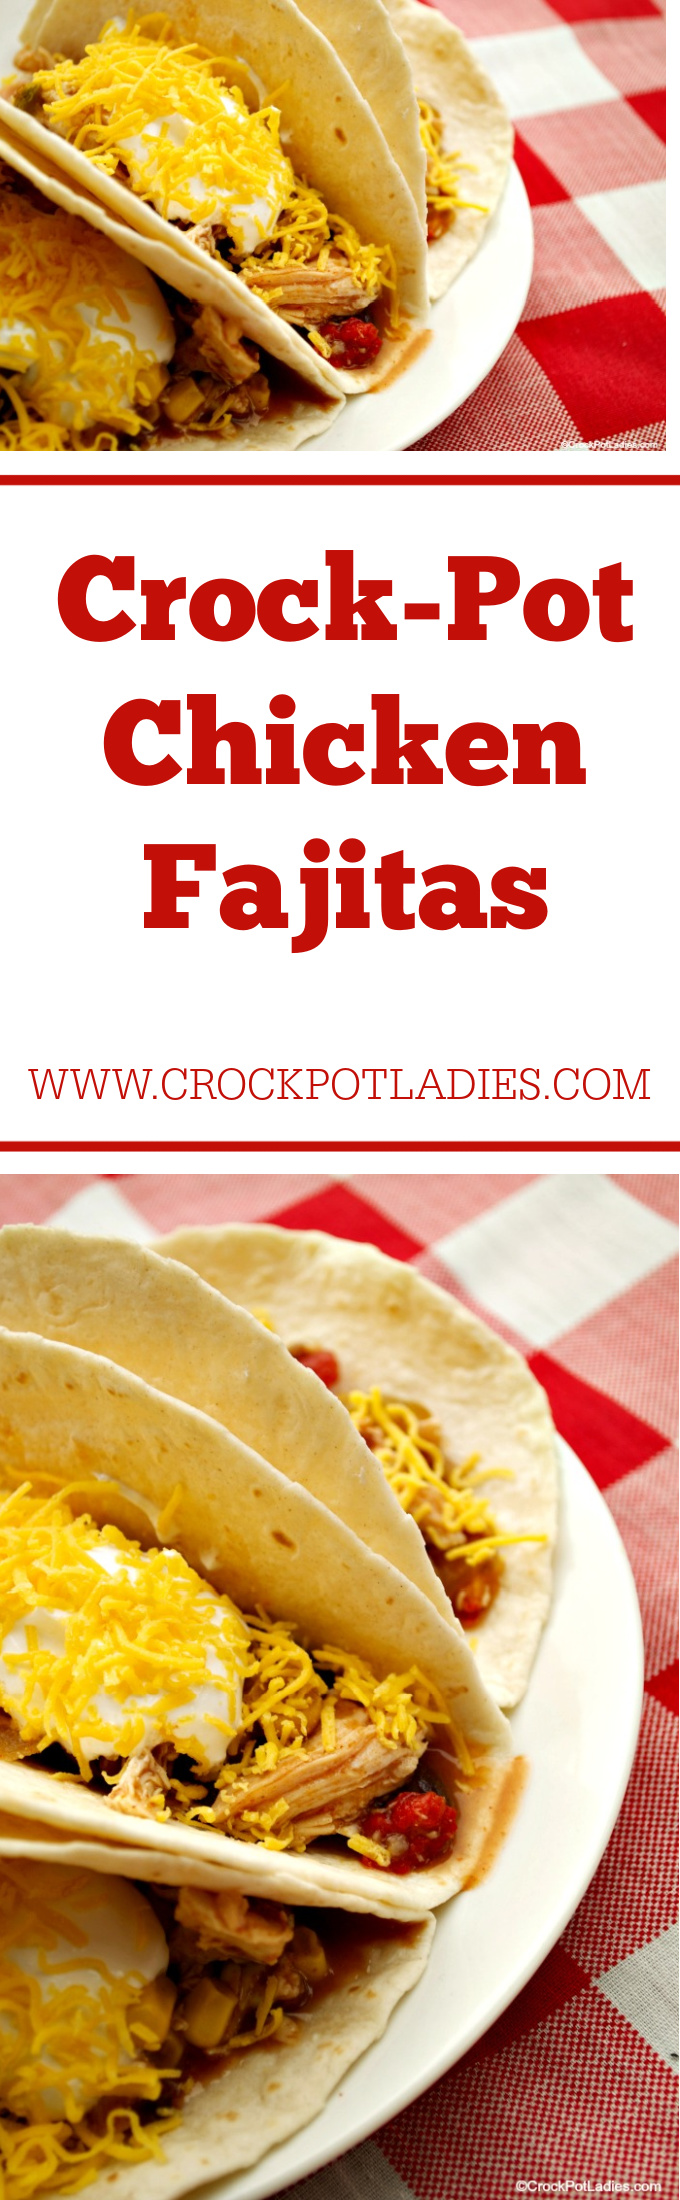 Crock-Pot Chicken Fajitas